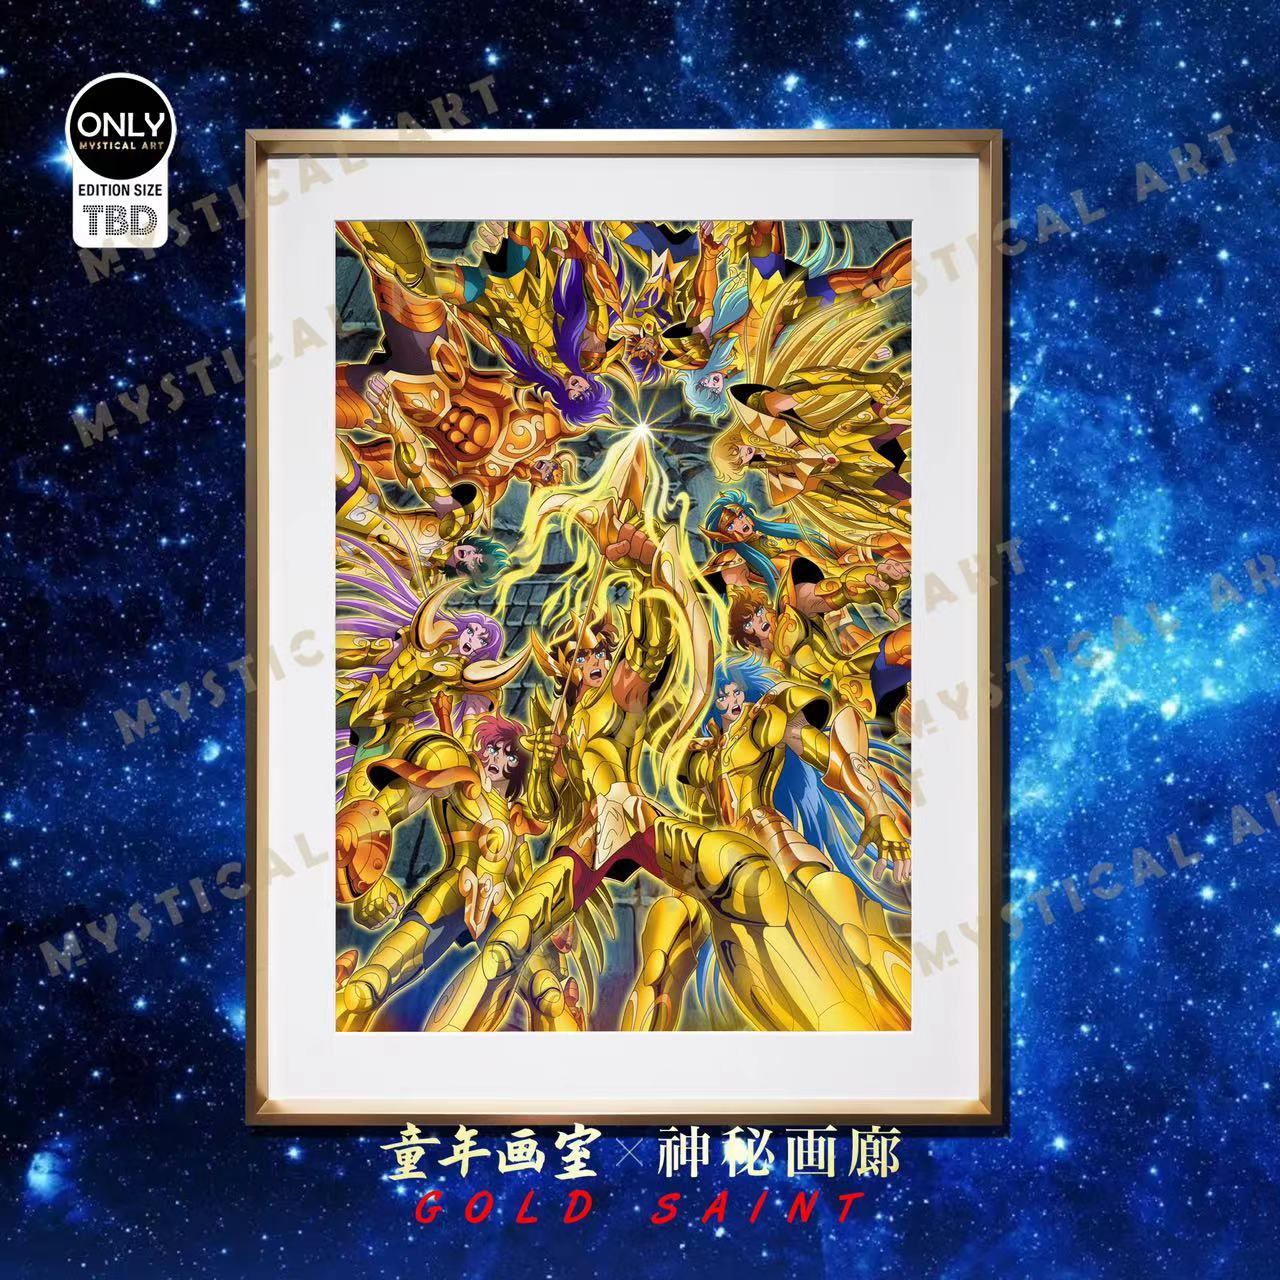 Mystical Art - Saint Seiya 12 Gold Saints Poster Frame (50mm X 68mm)